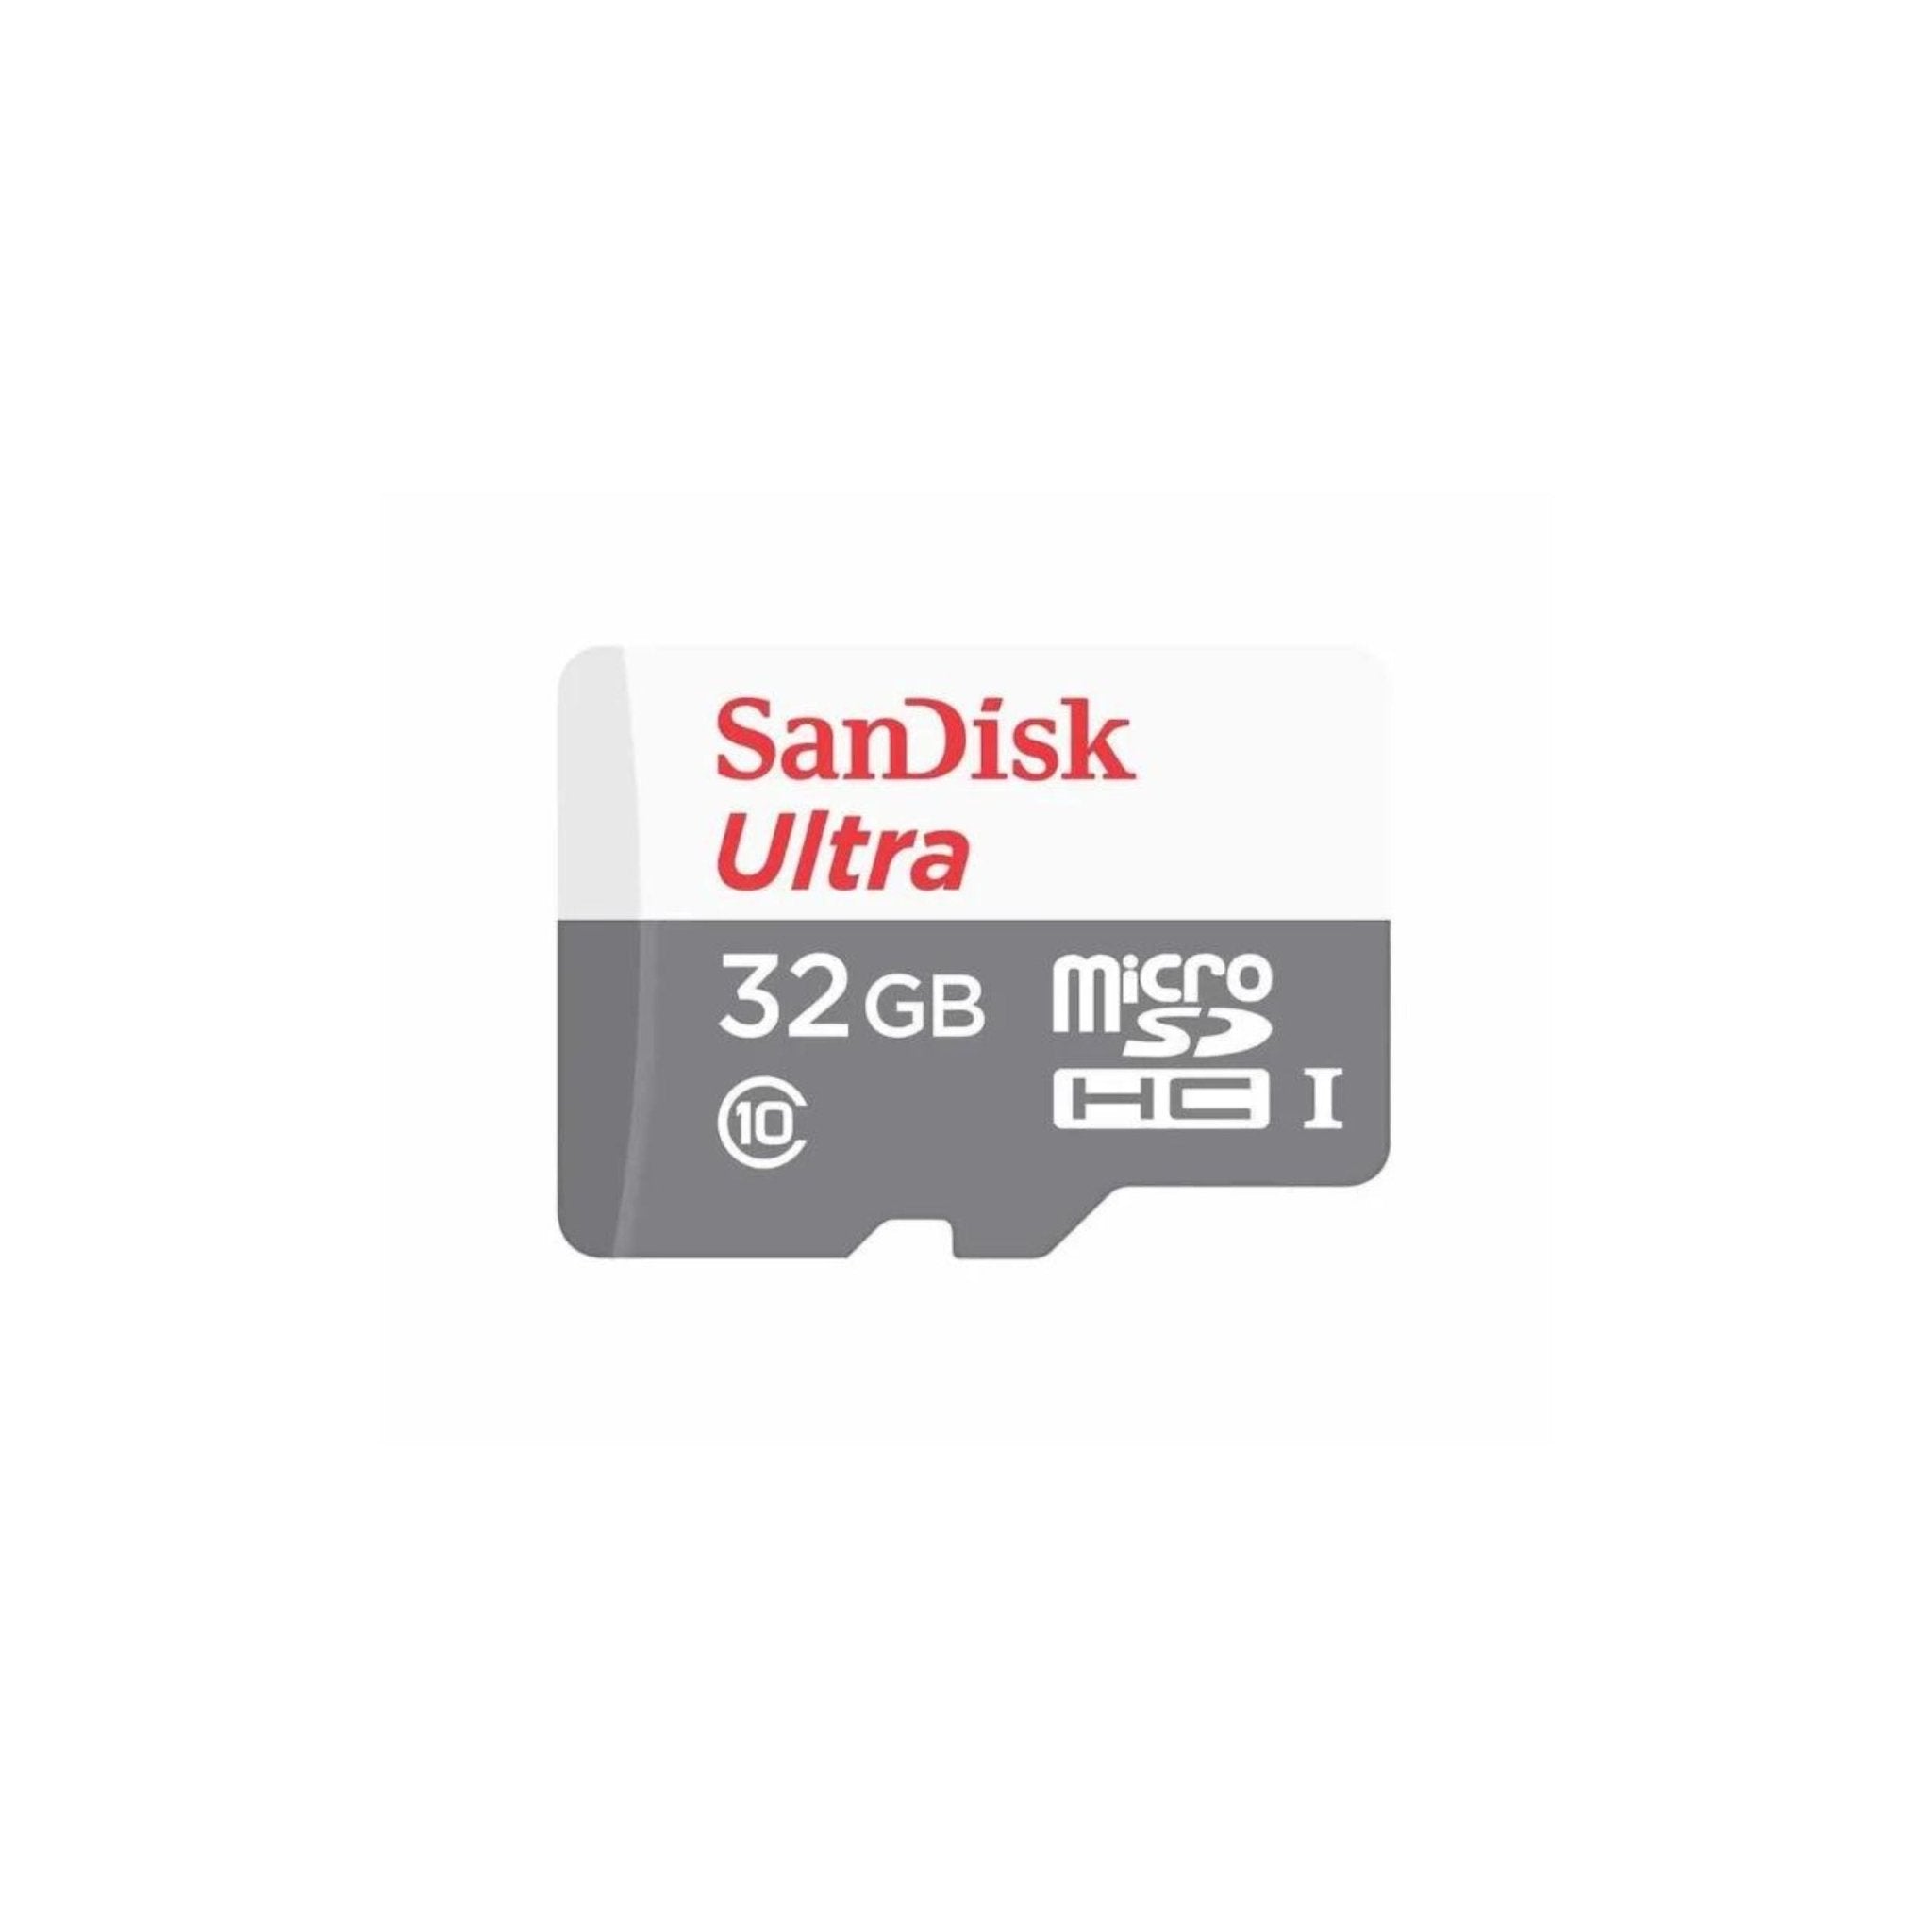 SanDisk Ultra microSDXC UHS-I Card